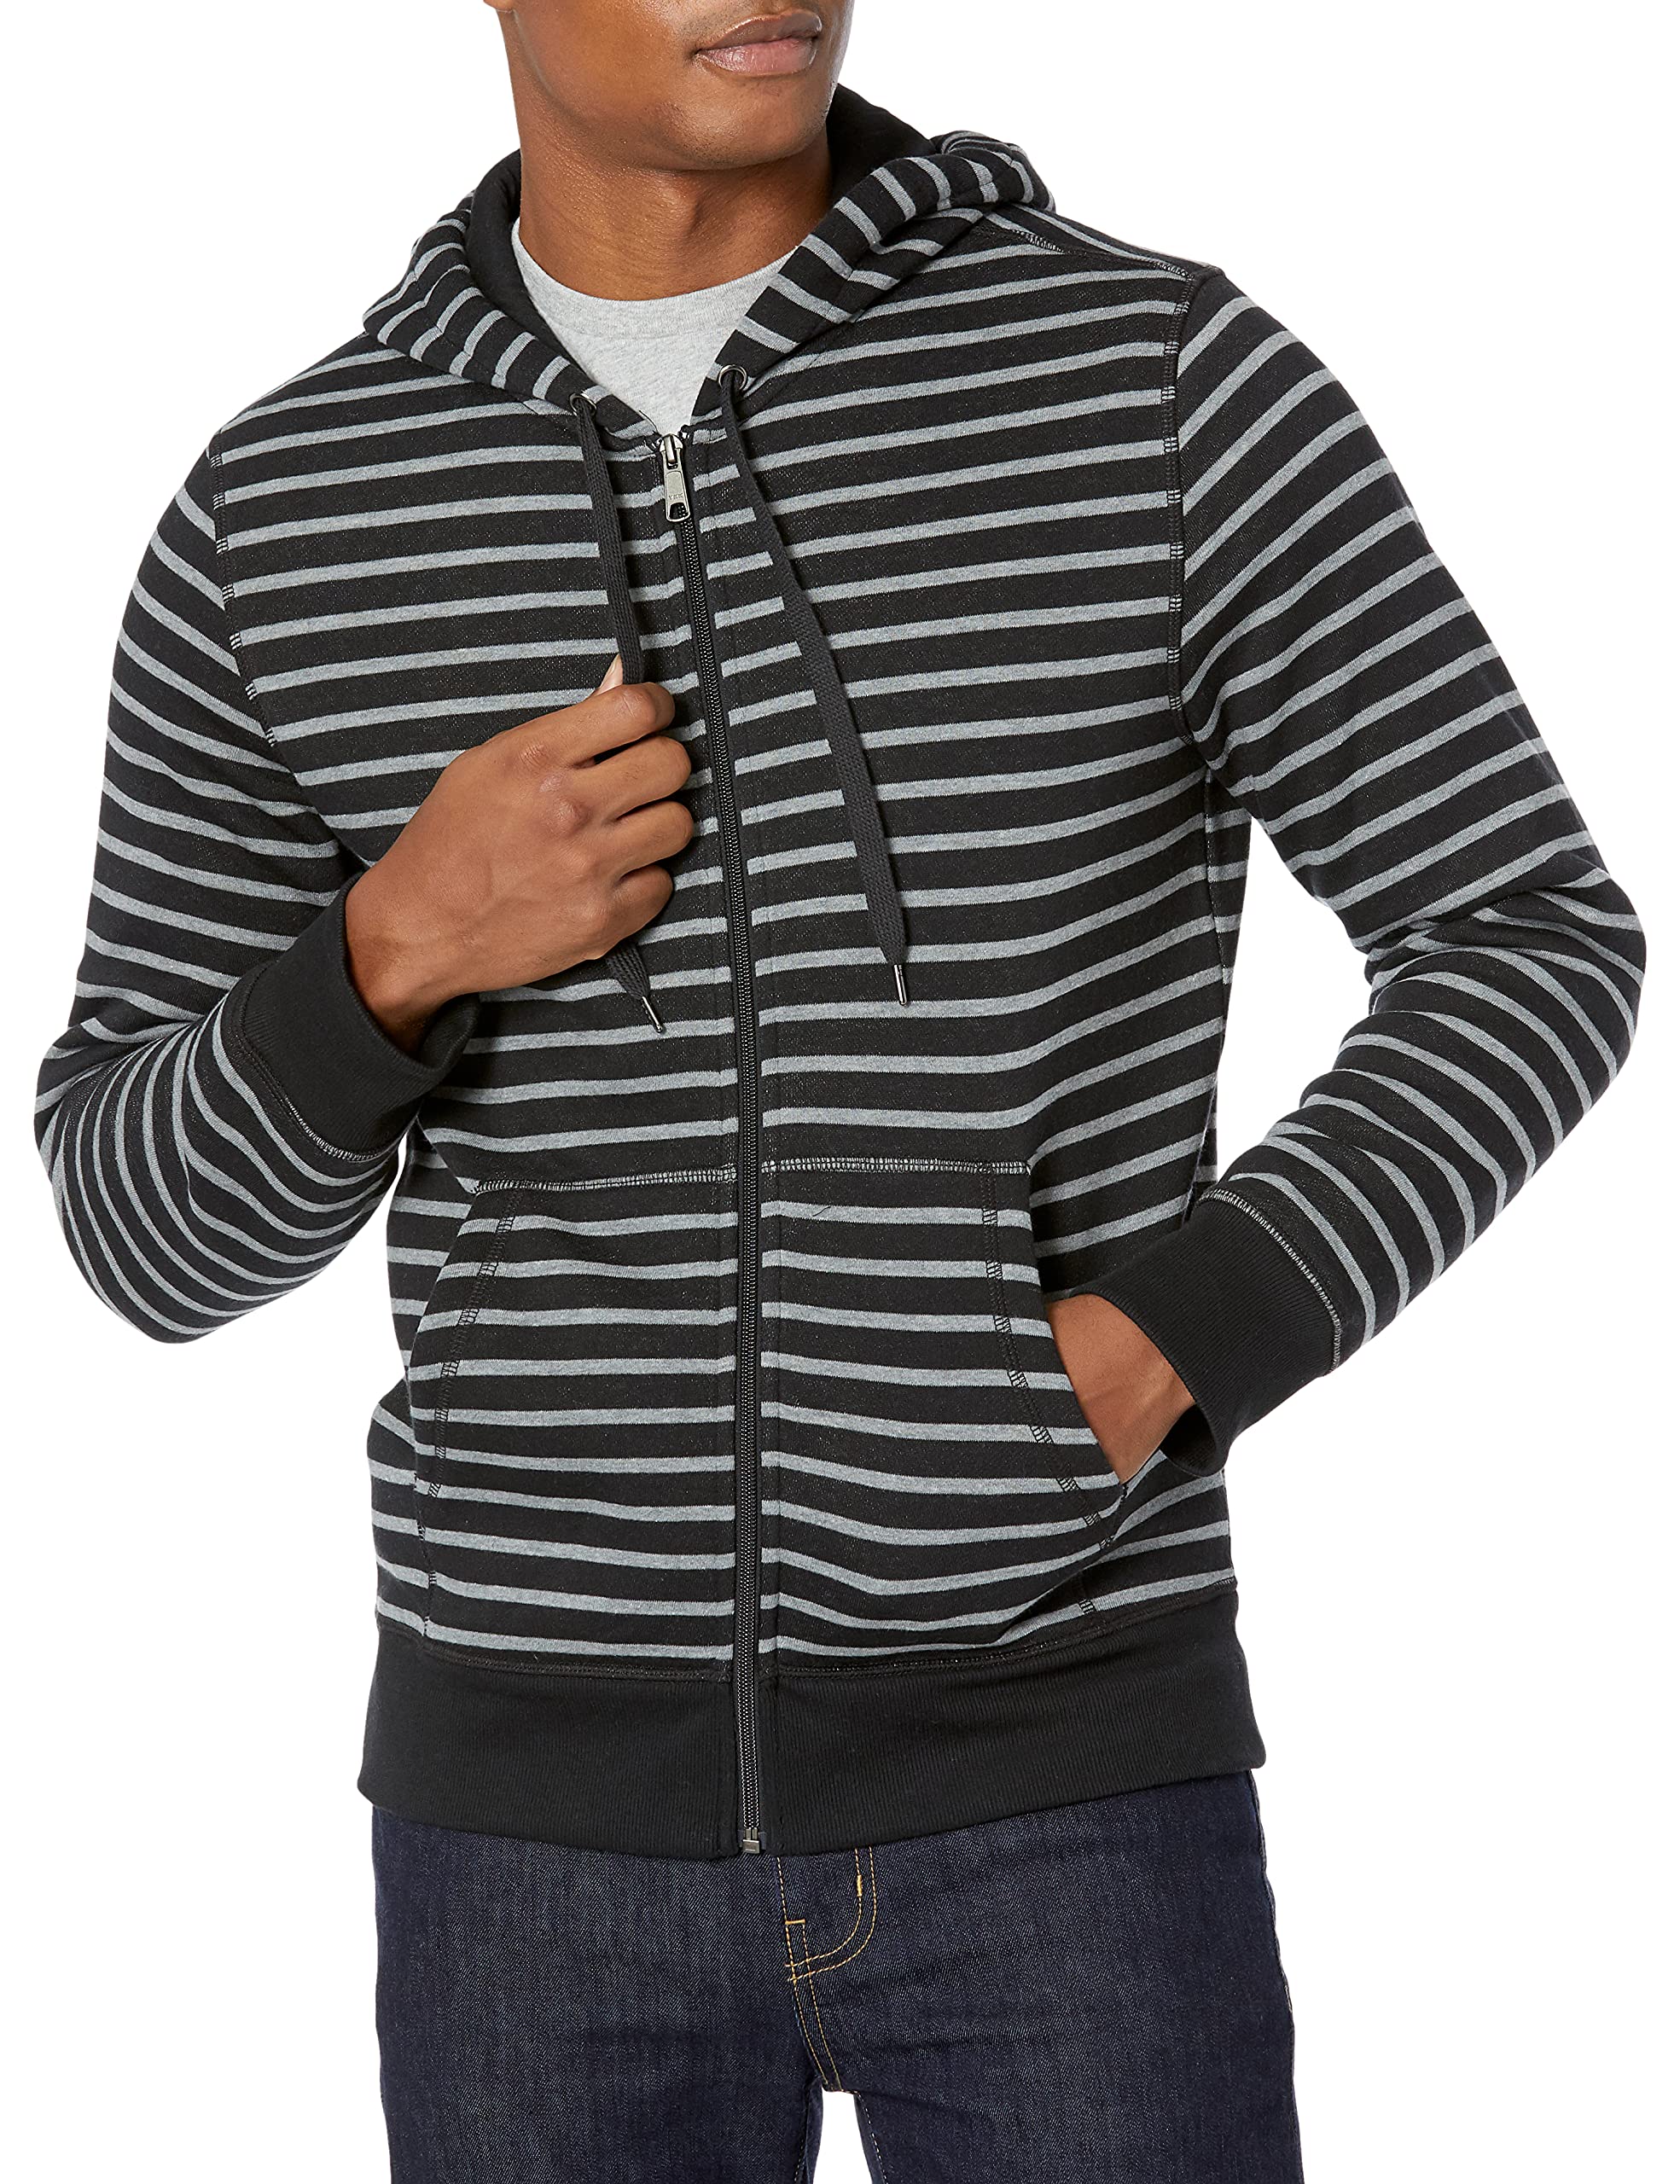 Amazon Essentials Men's Full-Zip Hooded Fleece Sweatshirt (Various) $9.20 + Free Shipping w/ Prime or on $35+